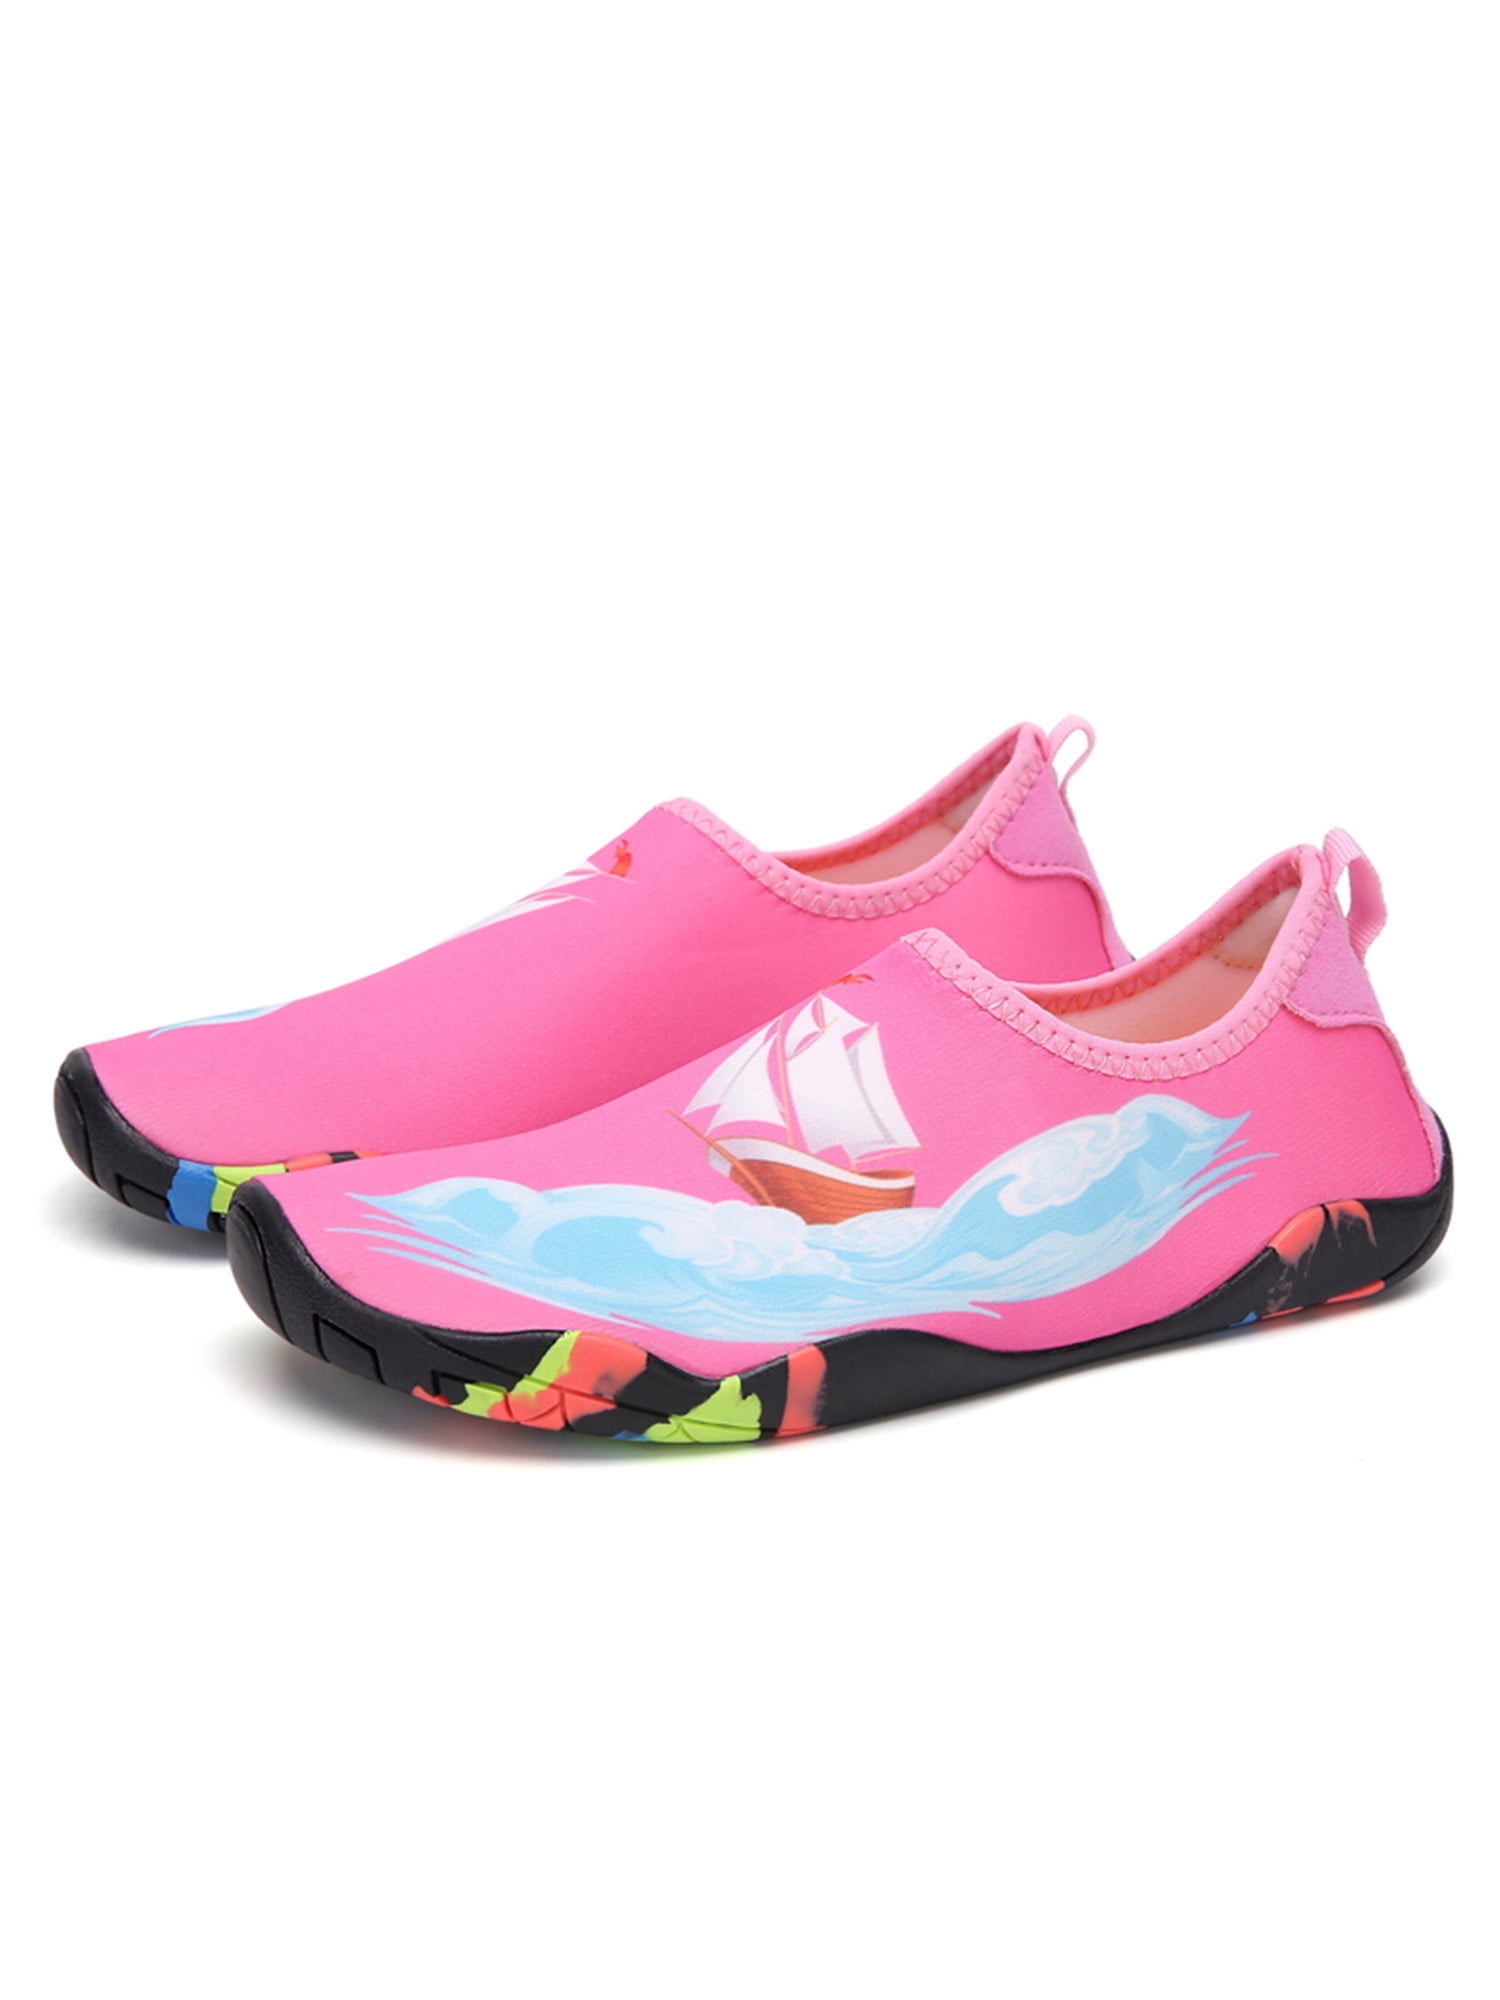 Details about   Mens Women Kids Water Shoes Aqua Socks Diving Surfing  Pool Beach Swim Shoe Size 